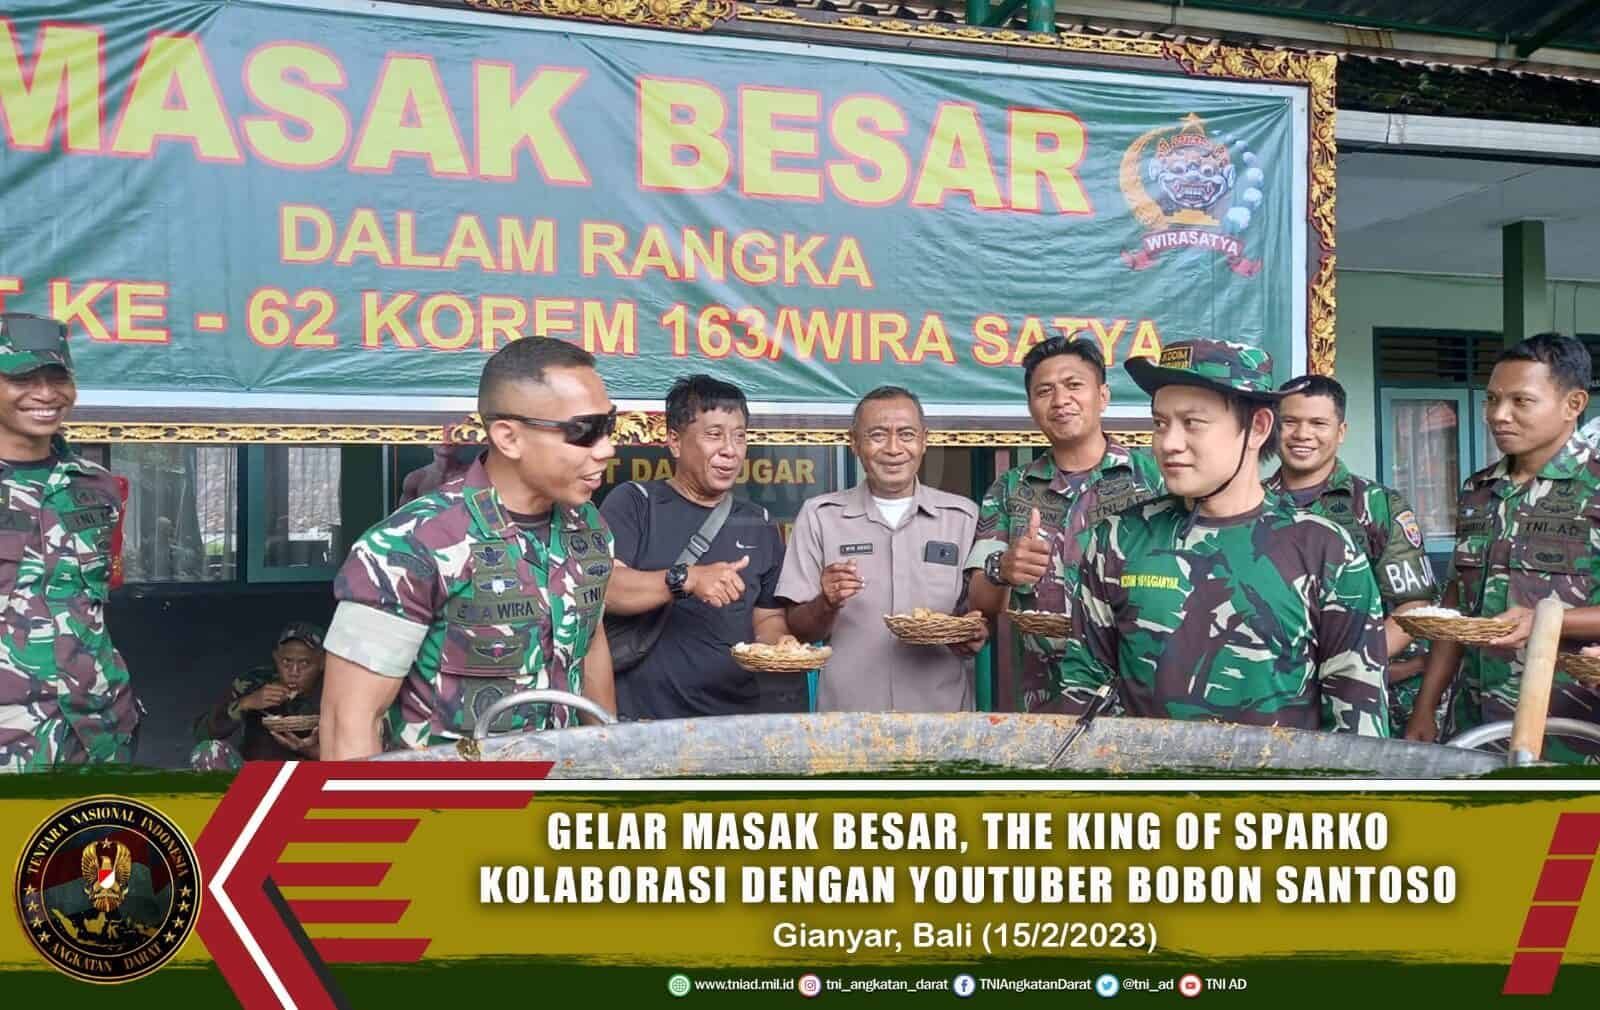 Gelar Masak Besar, The King of Sparko Kolaborasi dengan Youtuber Bobon Santoso